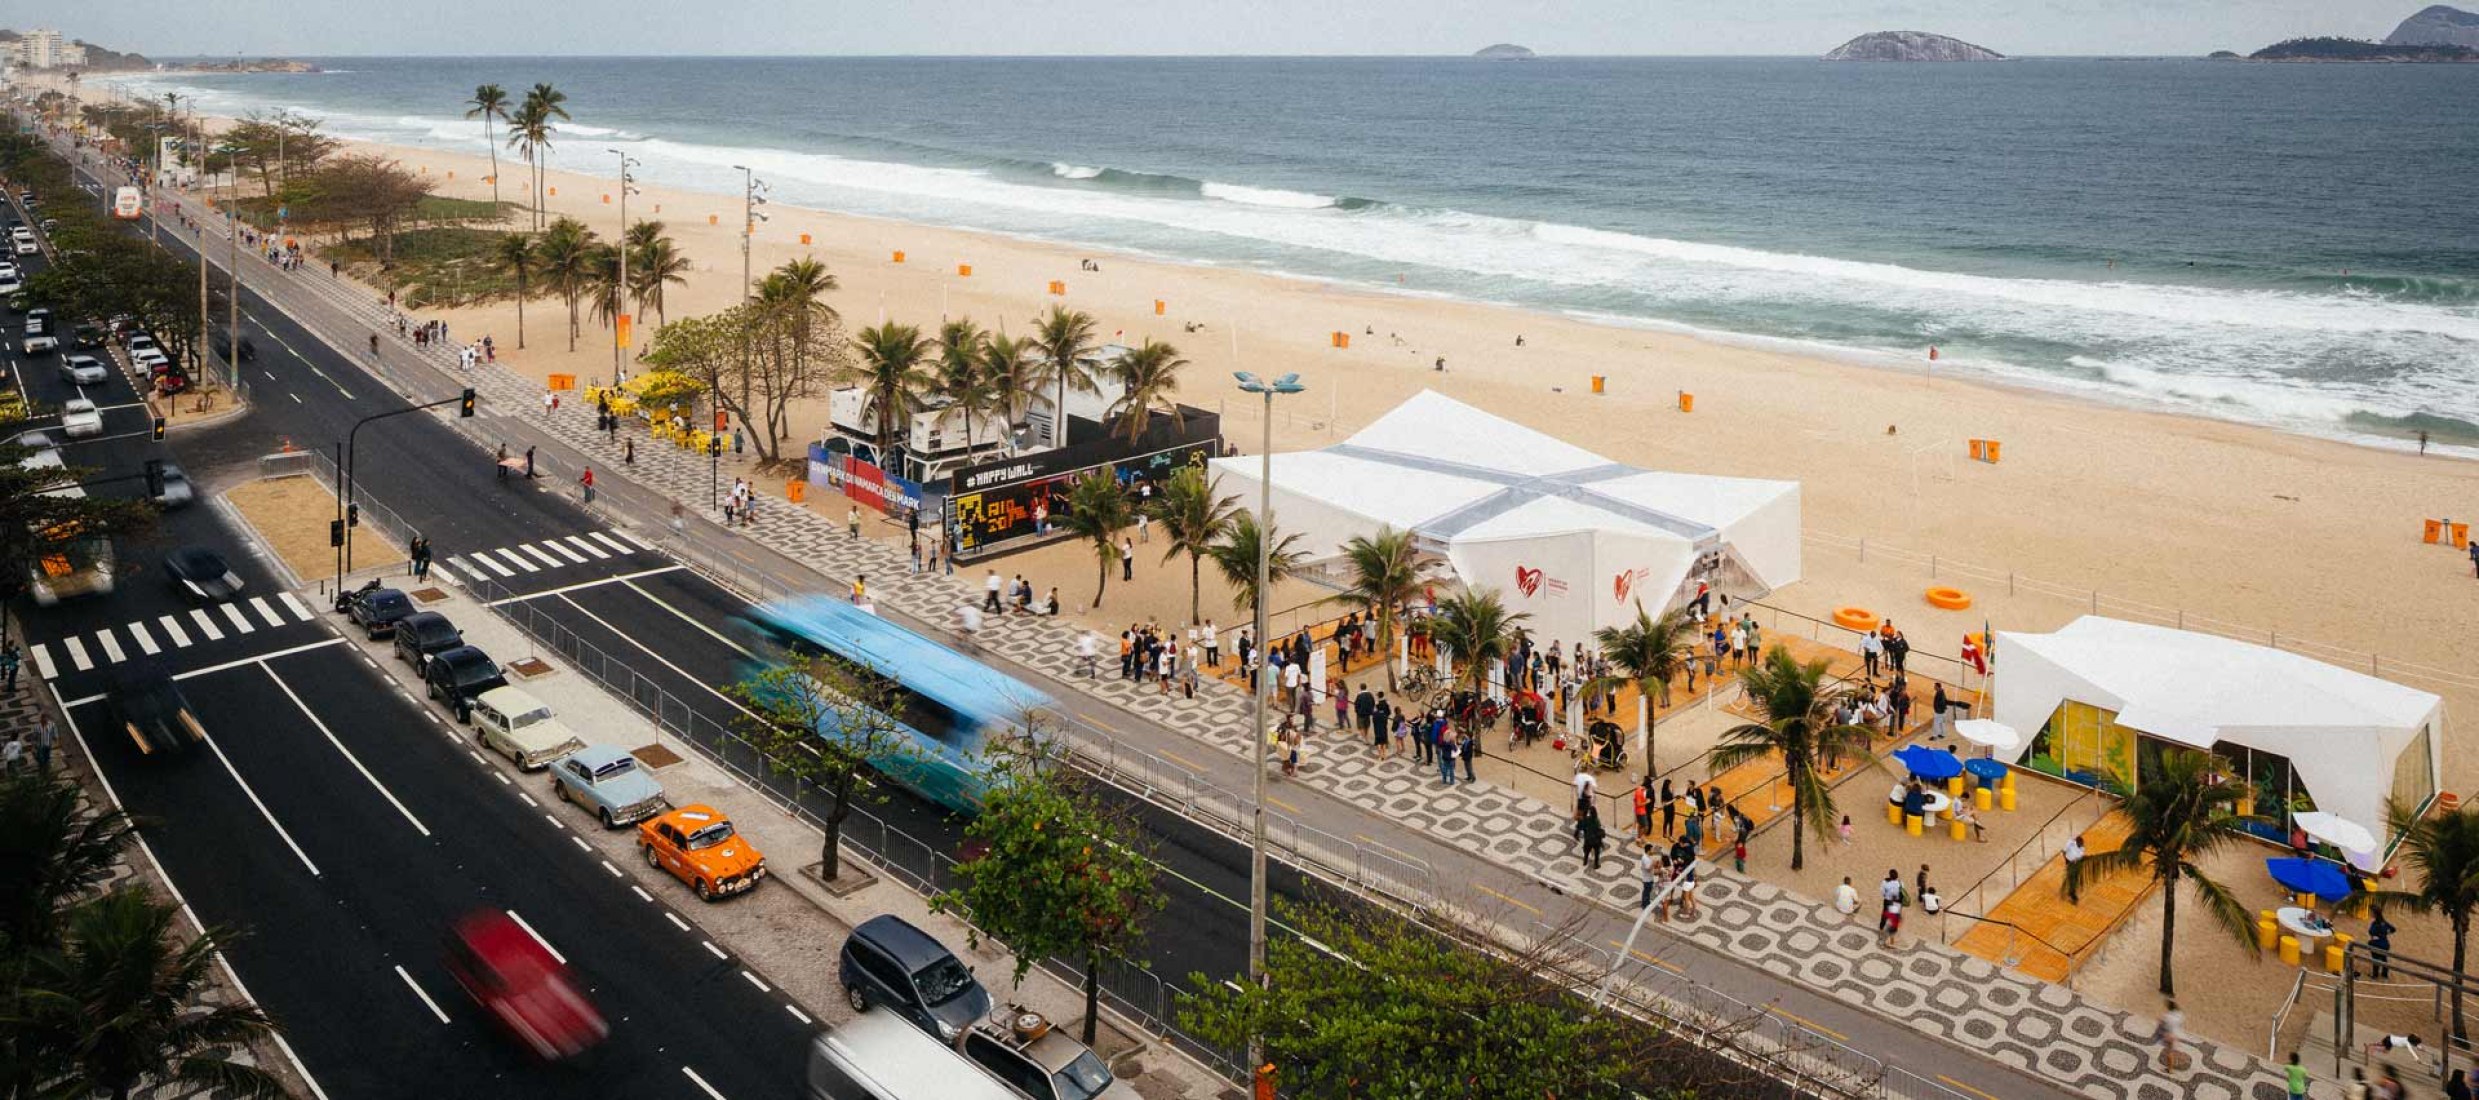 Danish Pavilion in Rio de Janeiro by Henning Larsen Architects. Photorgraph @ Pedro Kok